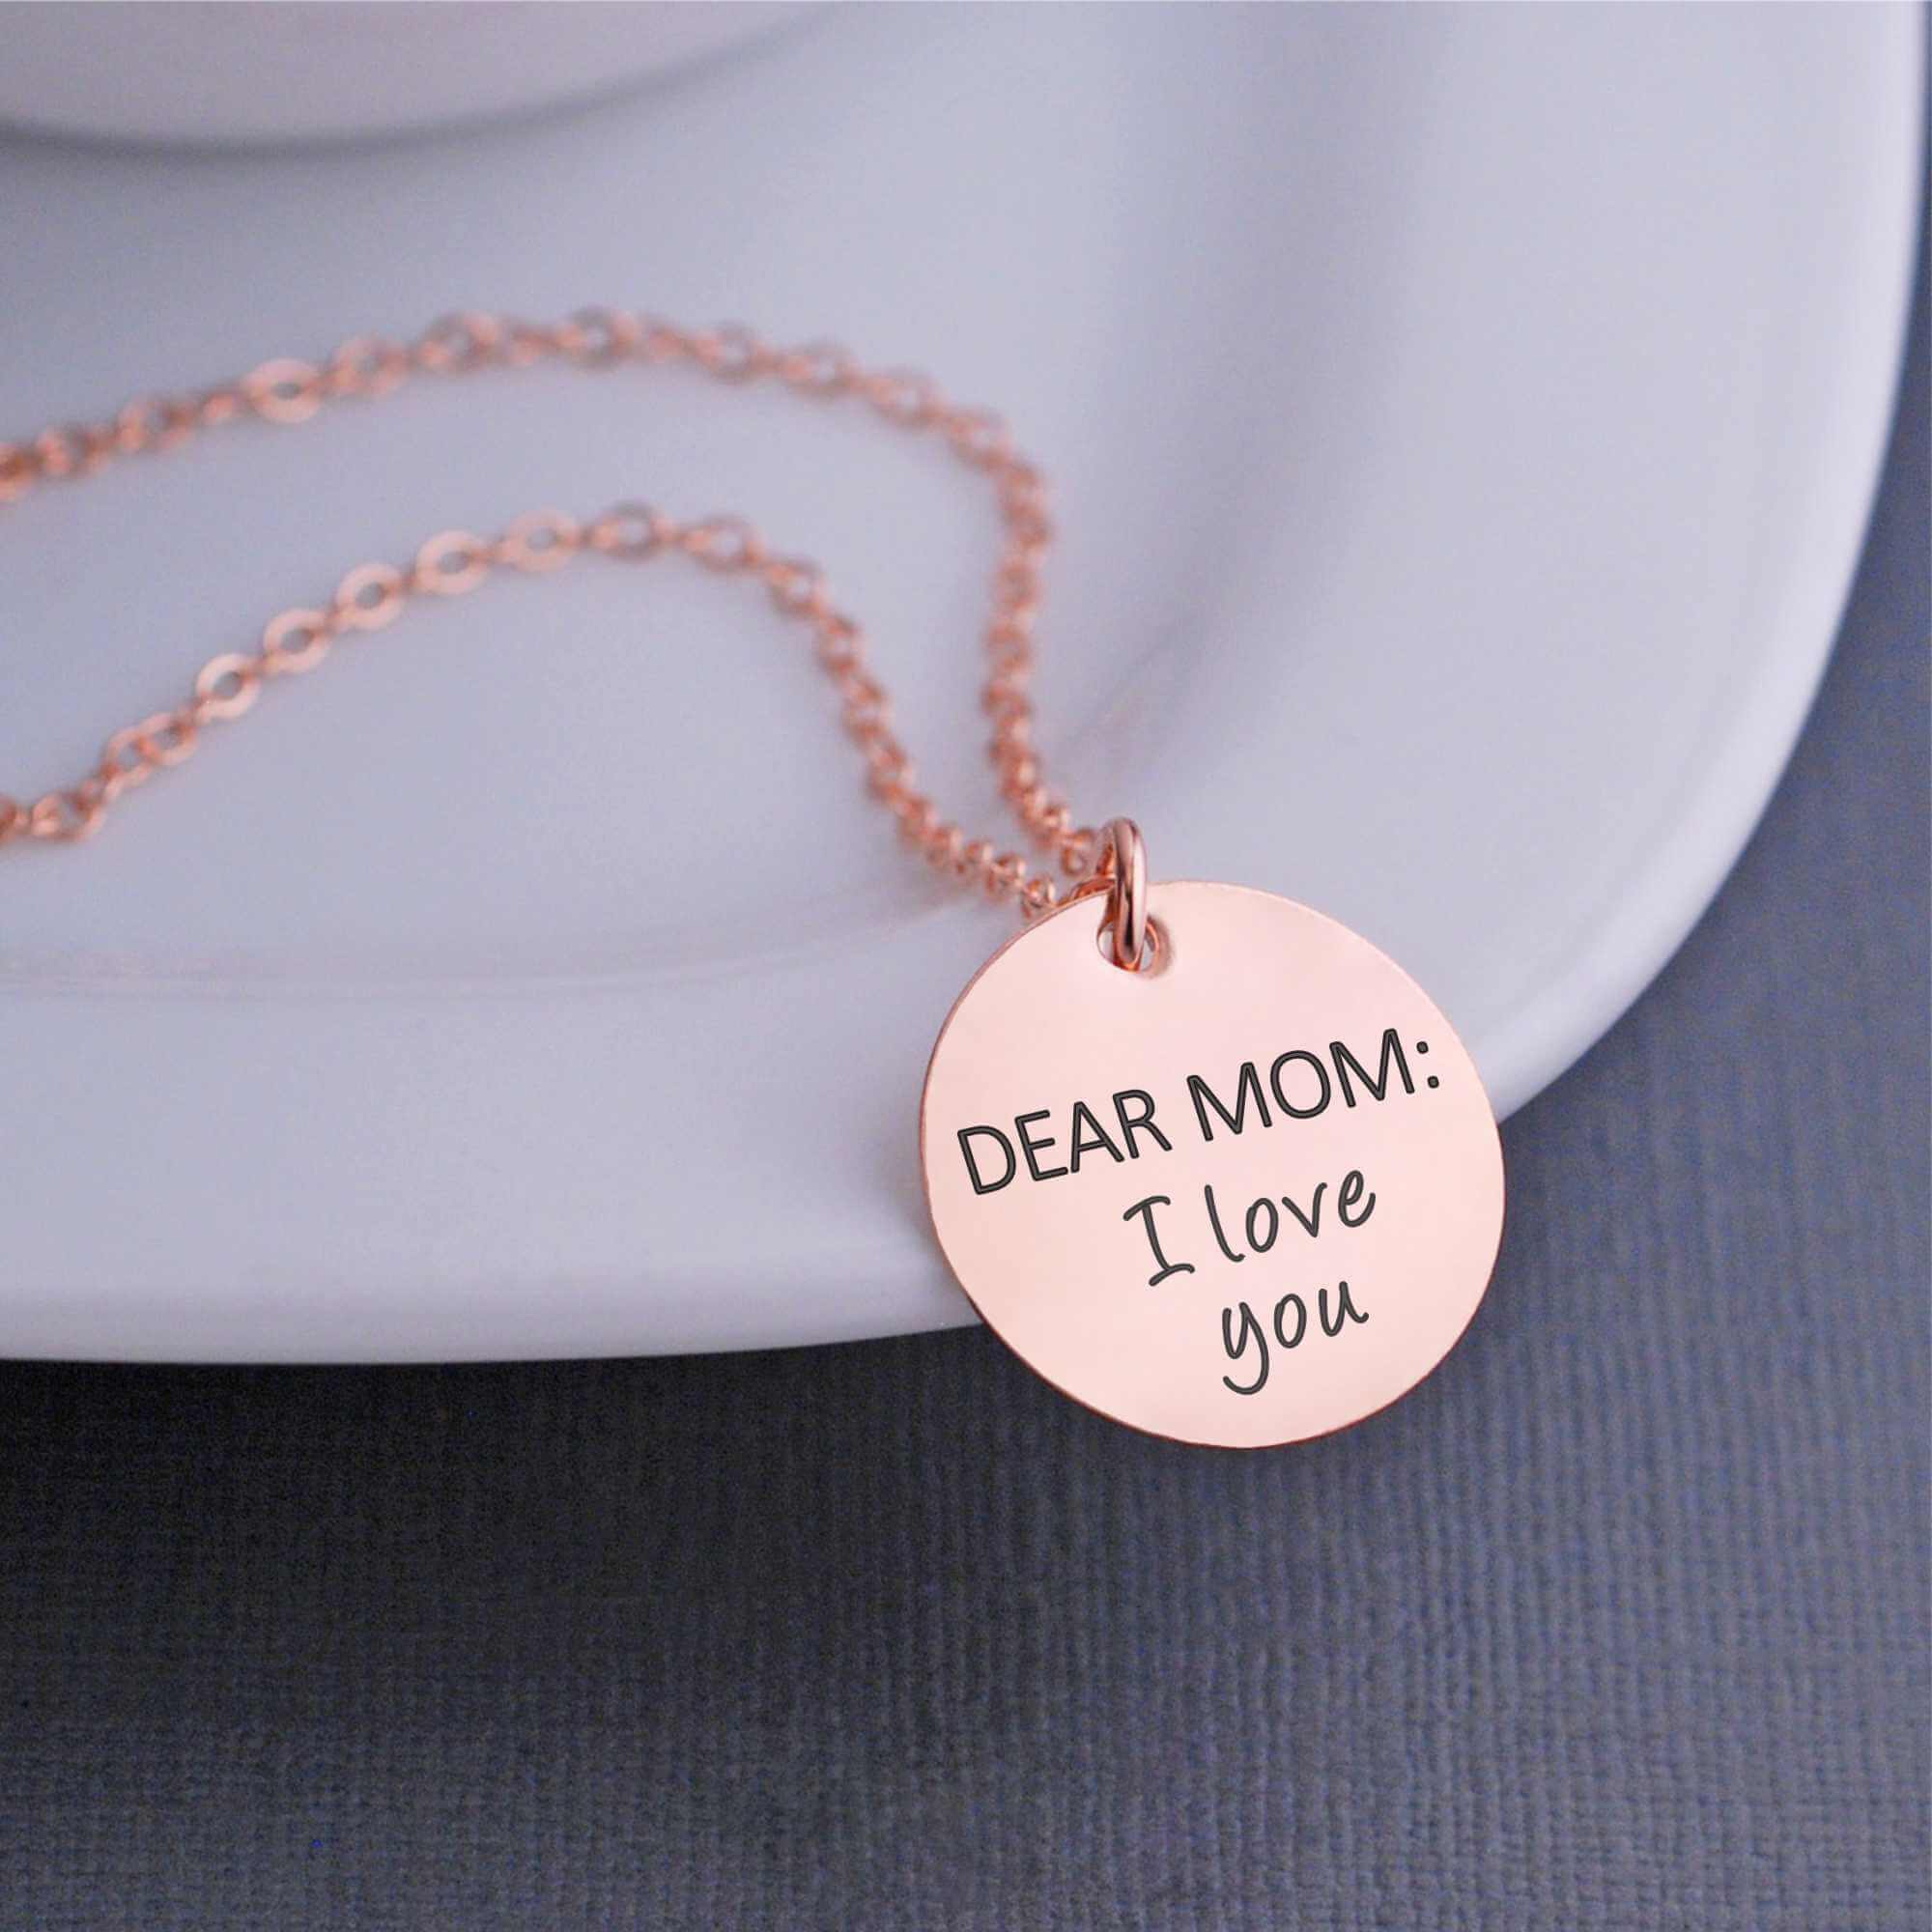 Dear Mom I Love You - Necklace